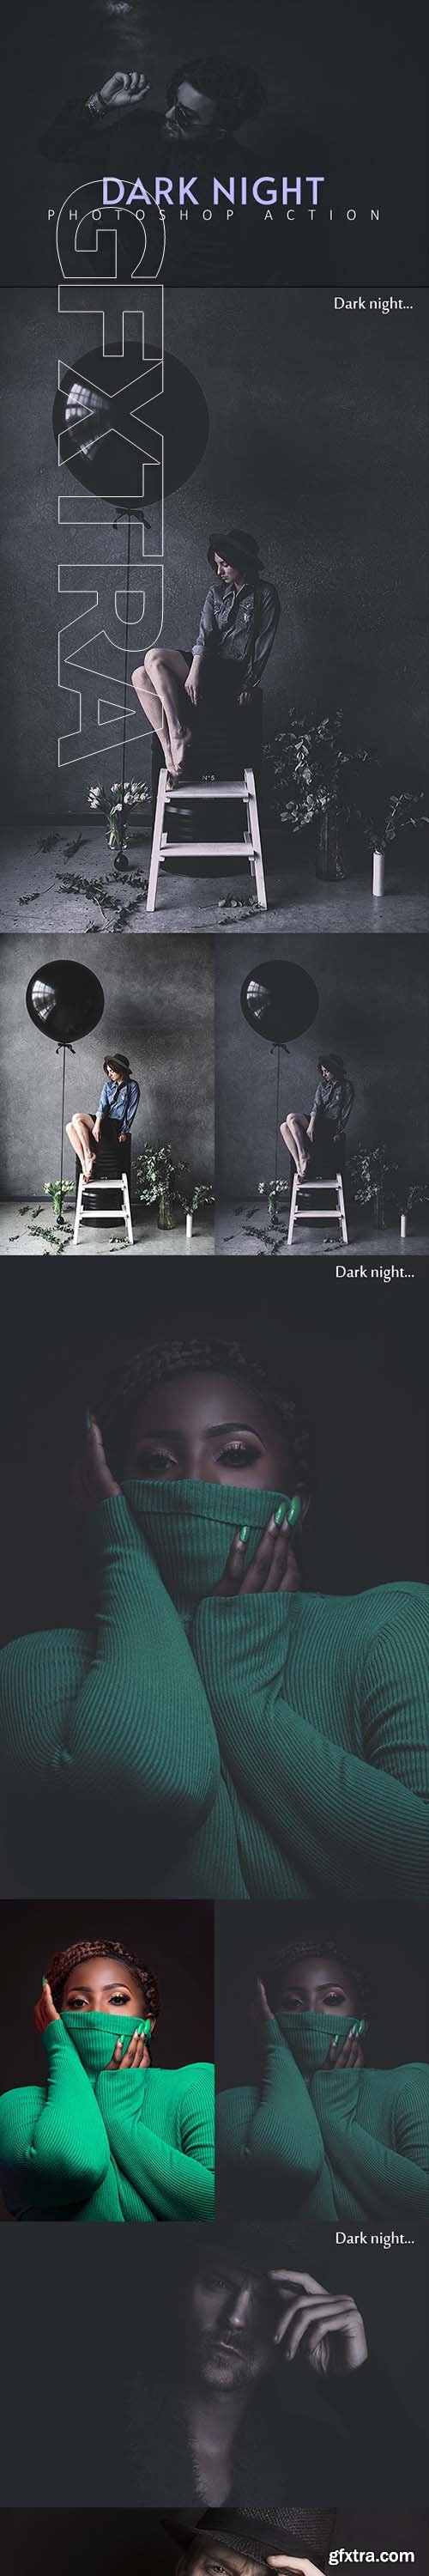 GraphicRiver - Dark Night Photoshop Action 25606778